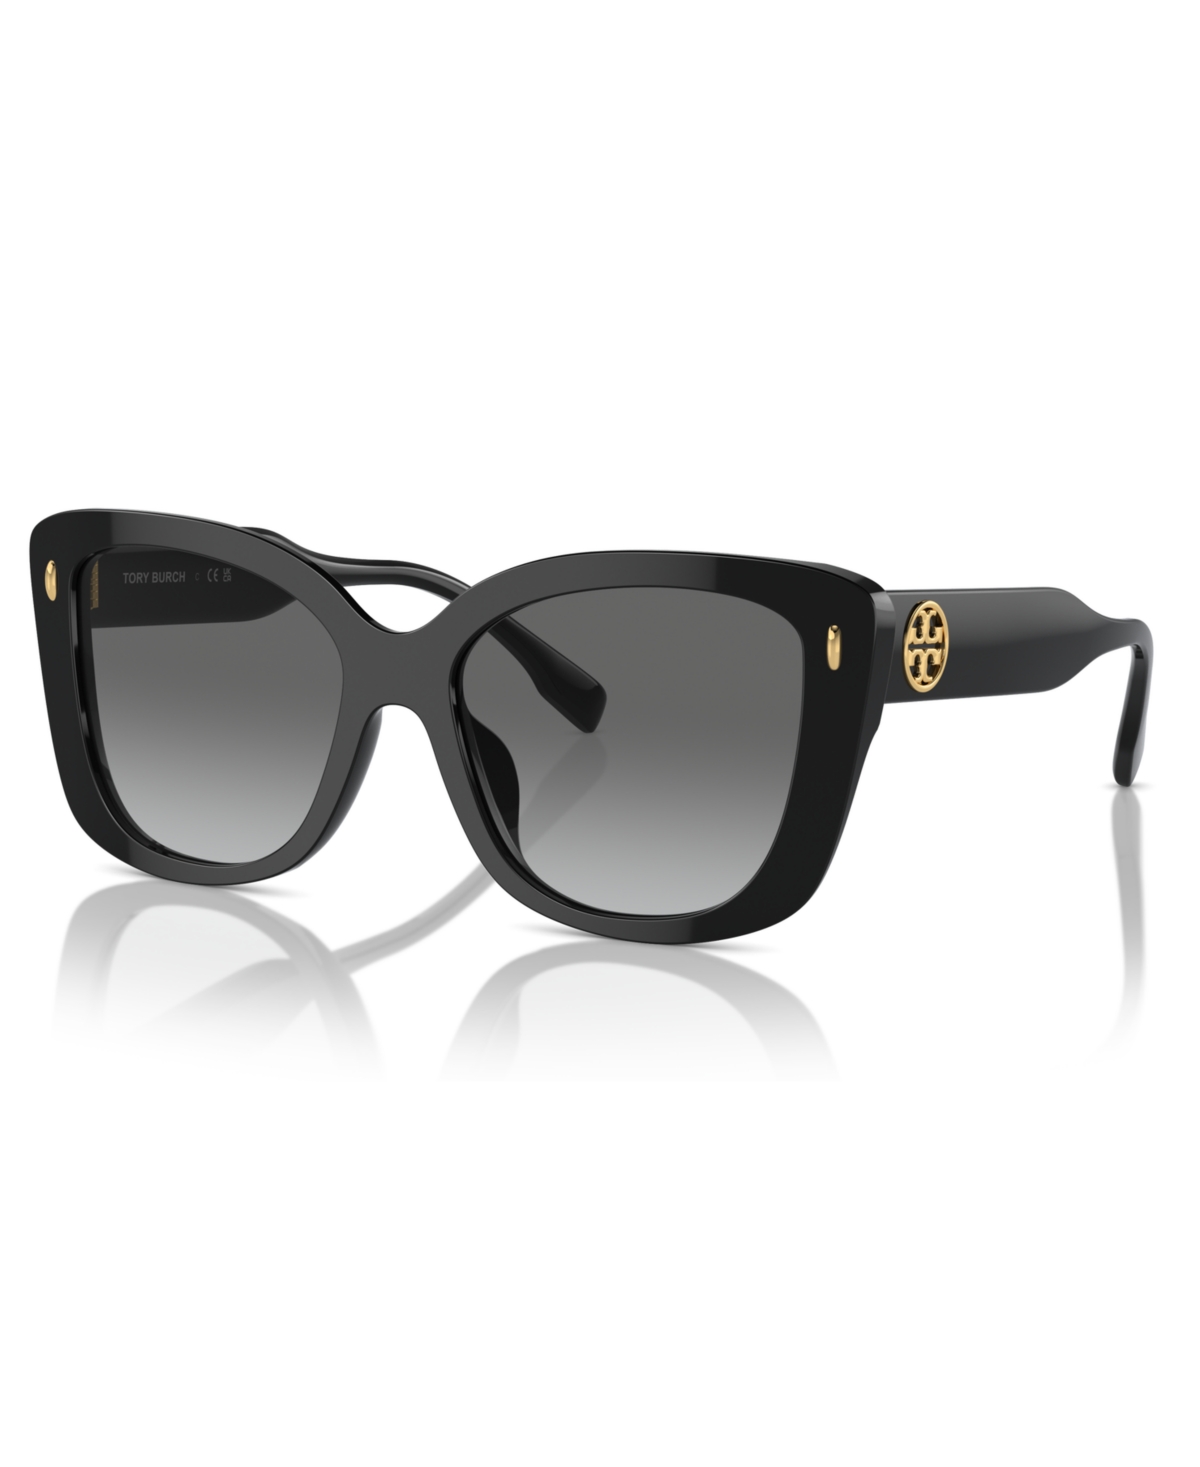 Tory Burch Women's Sunglasses, Ty7198u In Black